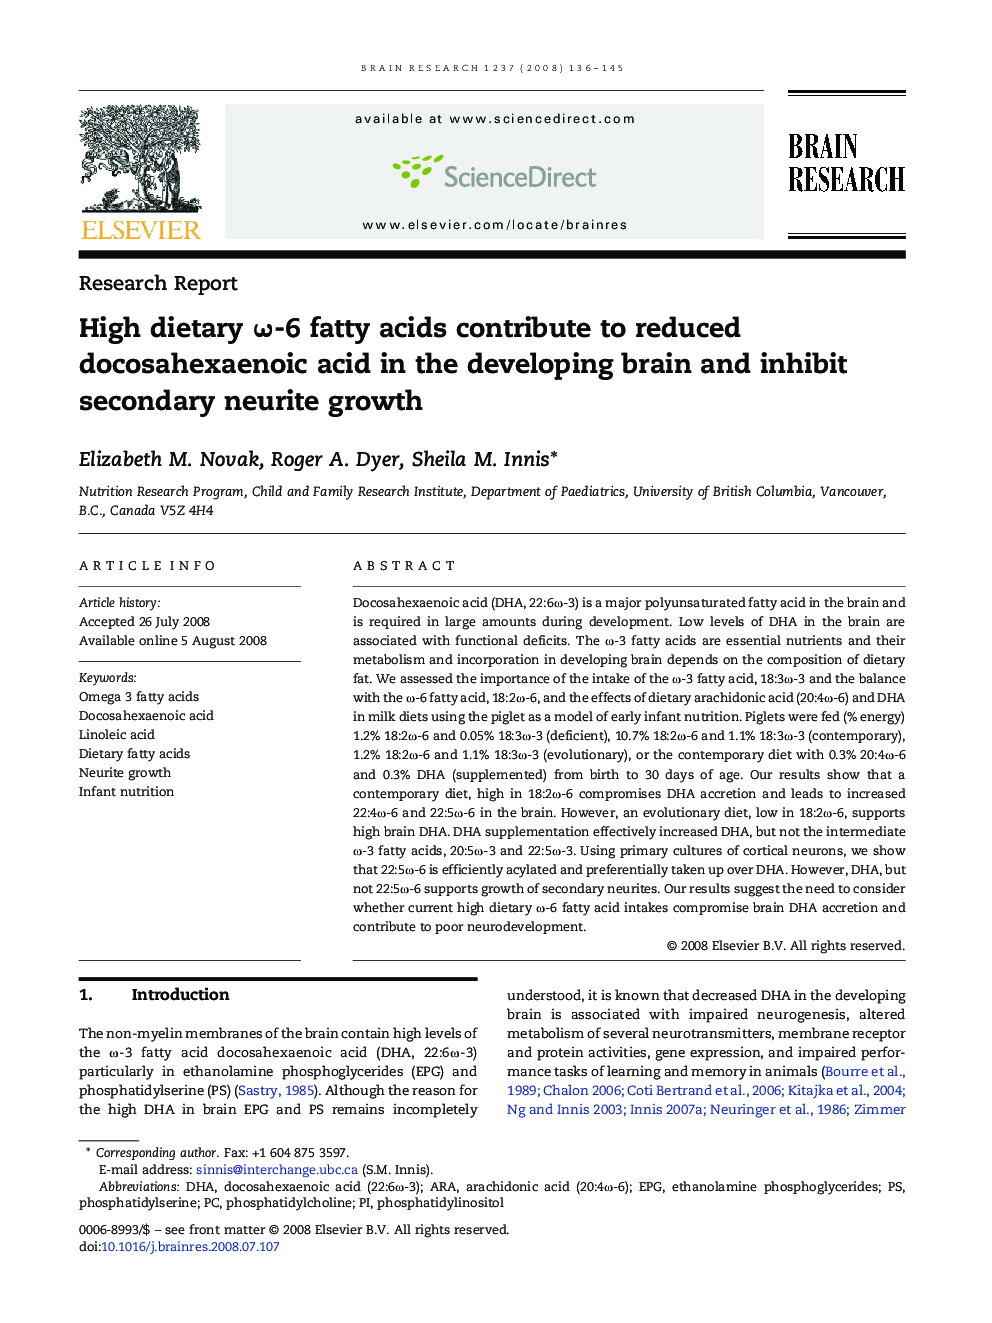 High dietary ω-6 fatty acids contribute to reduced docosahexaenoic acid in the developing brain and inhibit secondary neurite growth